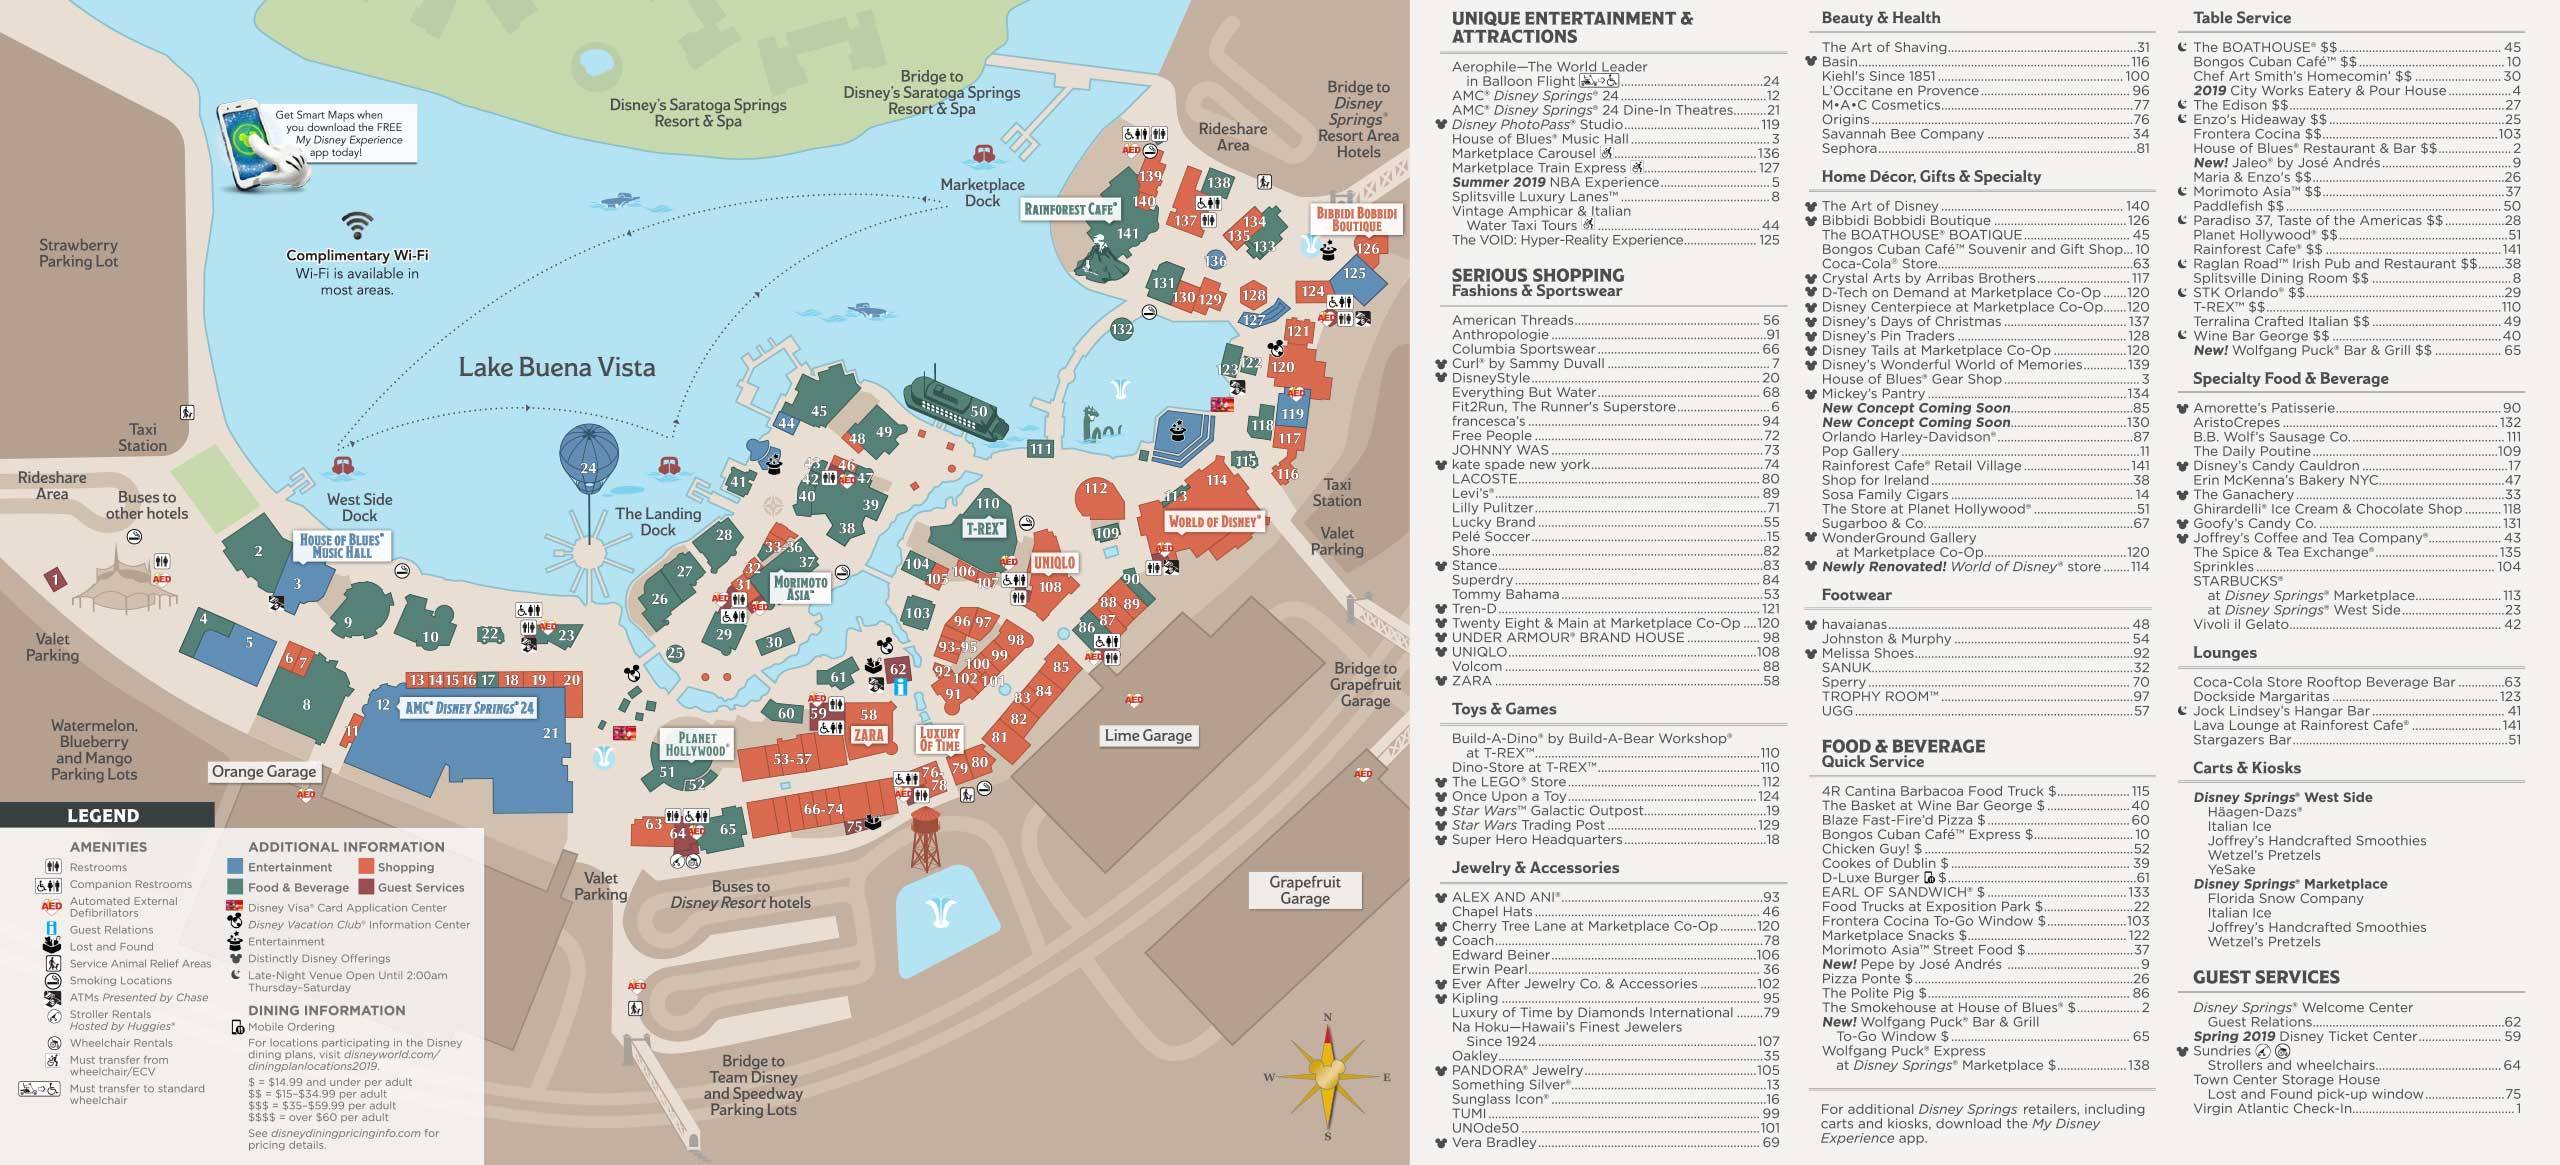 Disney Springs Guide Map January 2019 - Back